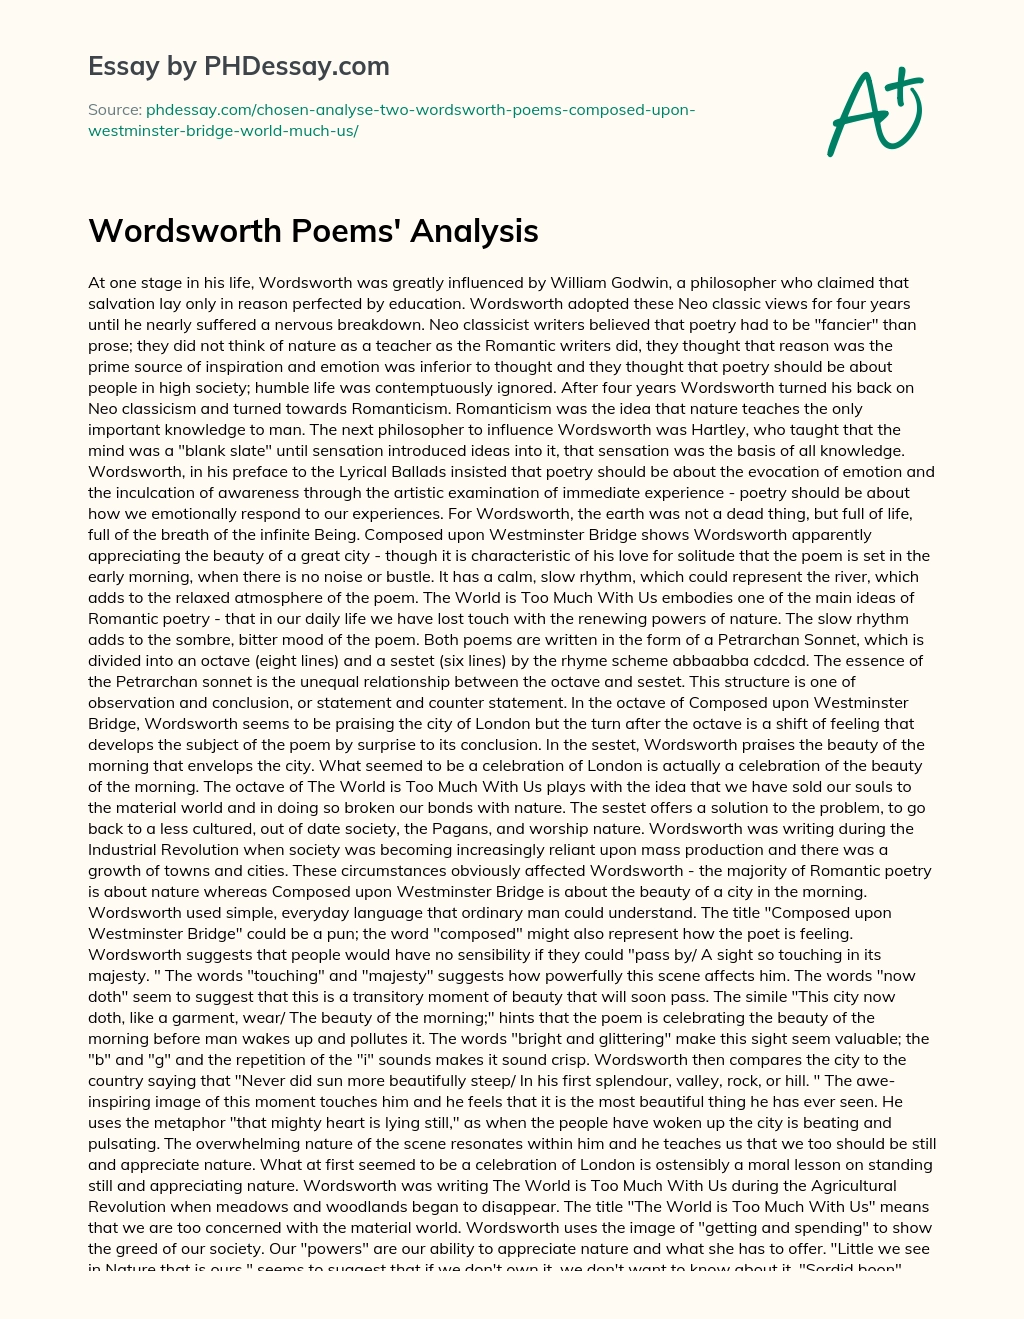 Wordsworth Poems’ Analysis essay